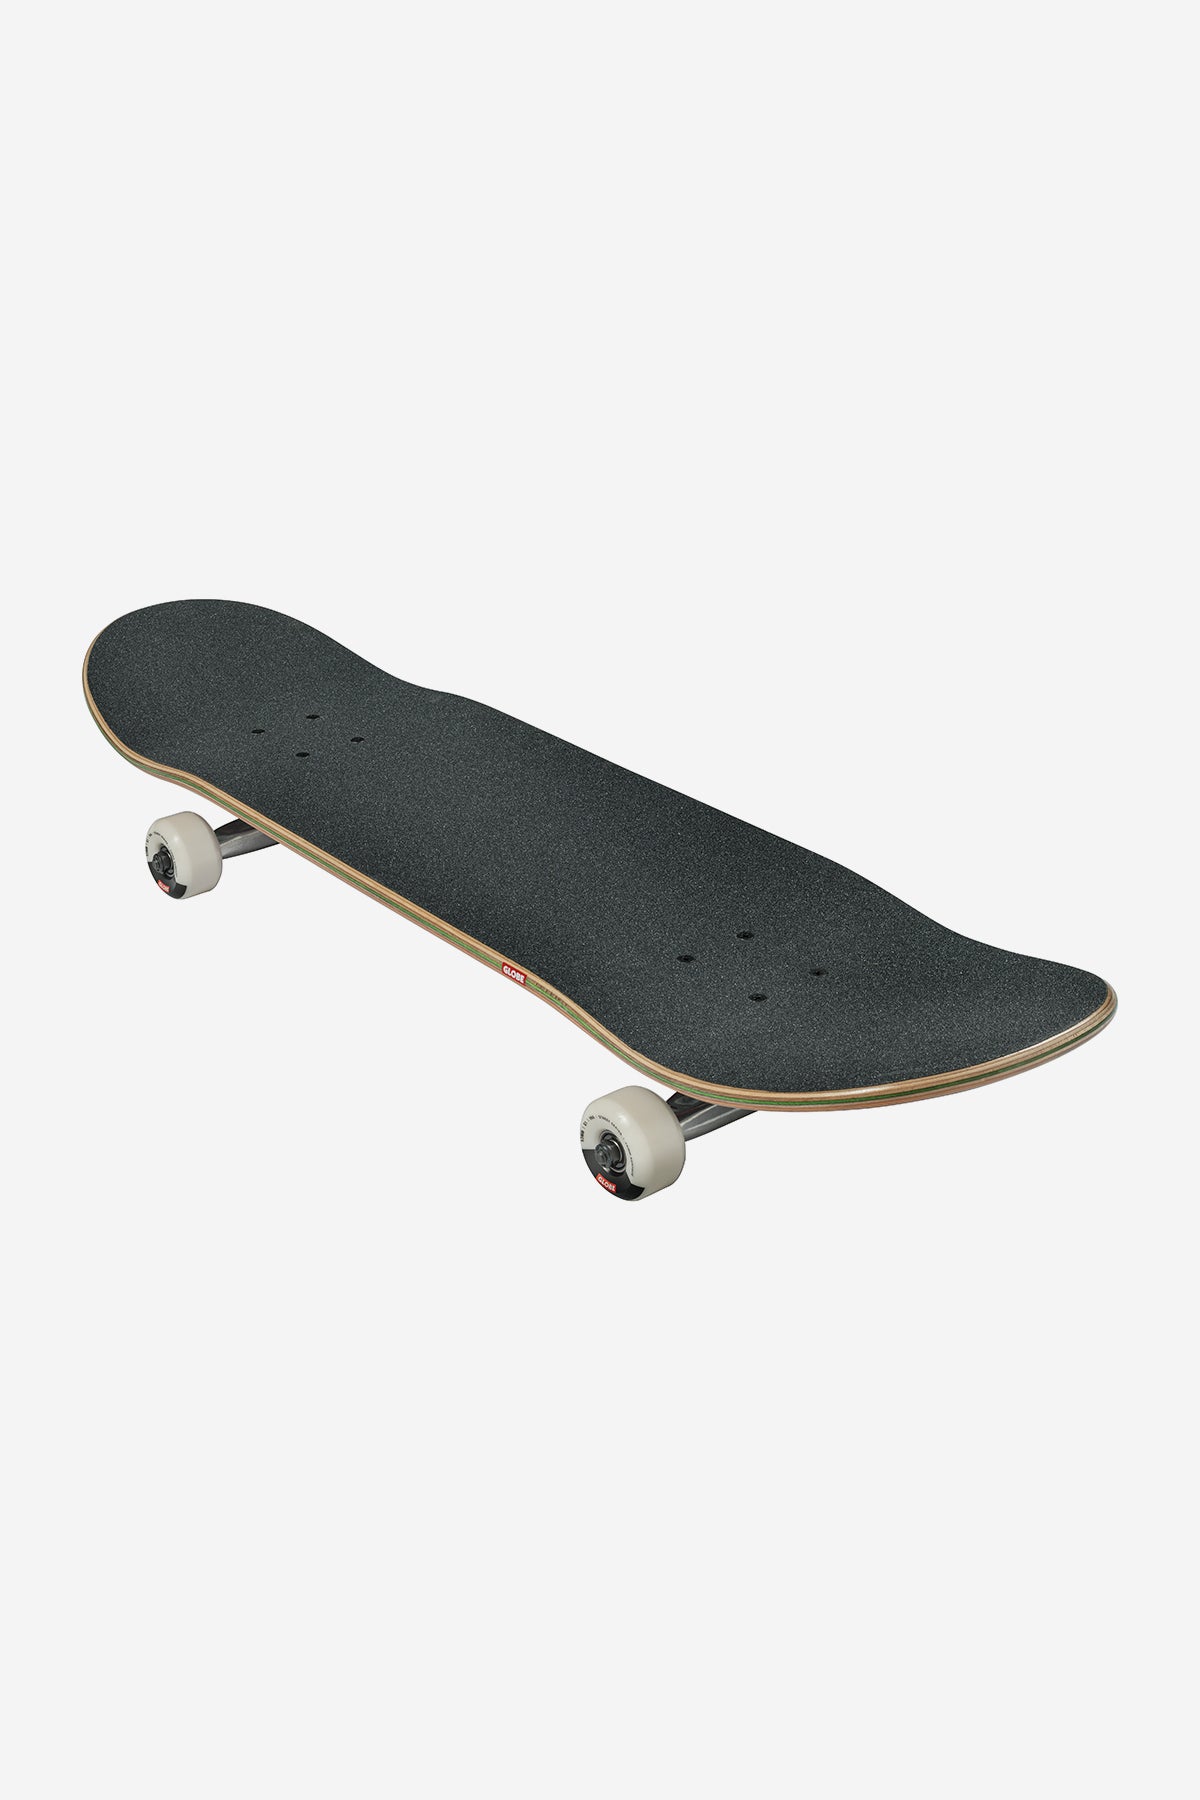 Globe - G1 Stack - Daydream - 8,25" Completo Skateboard